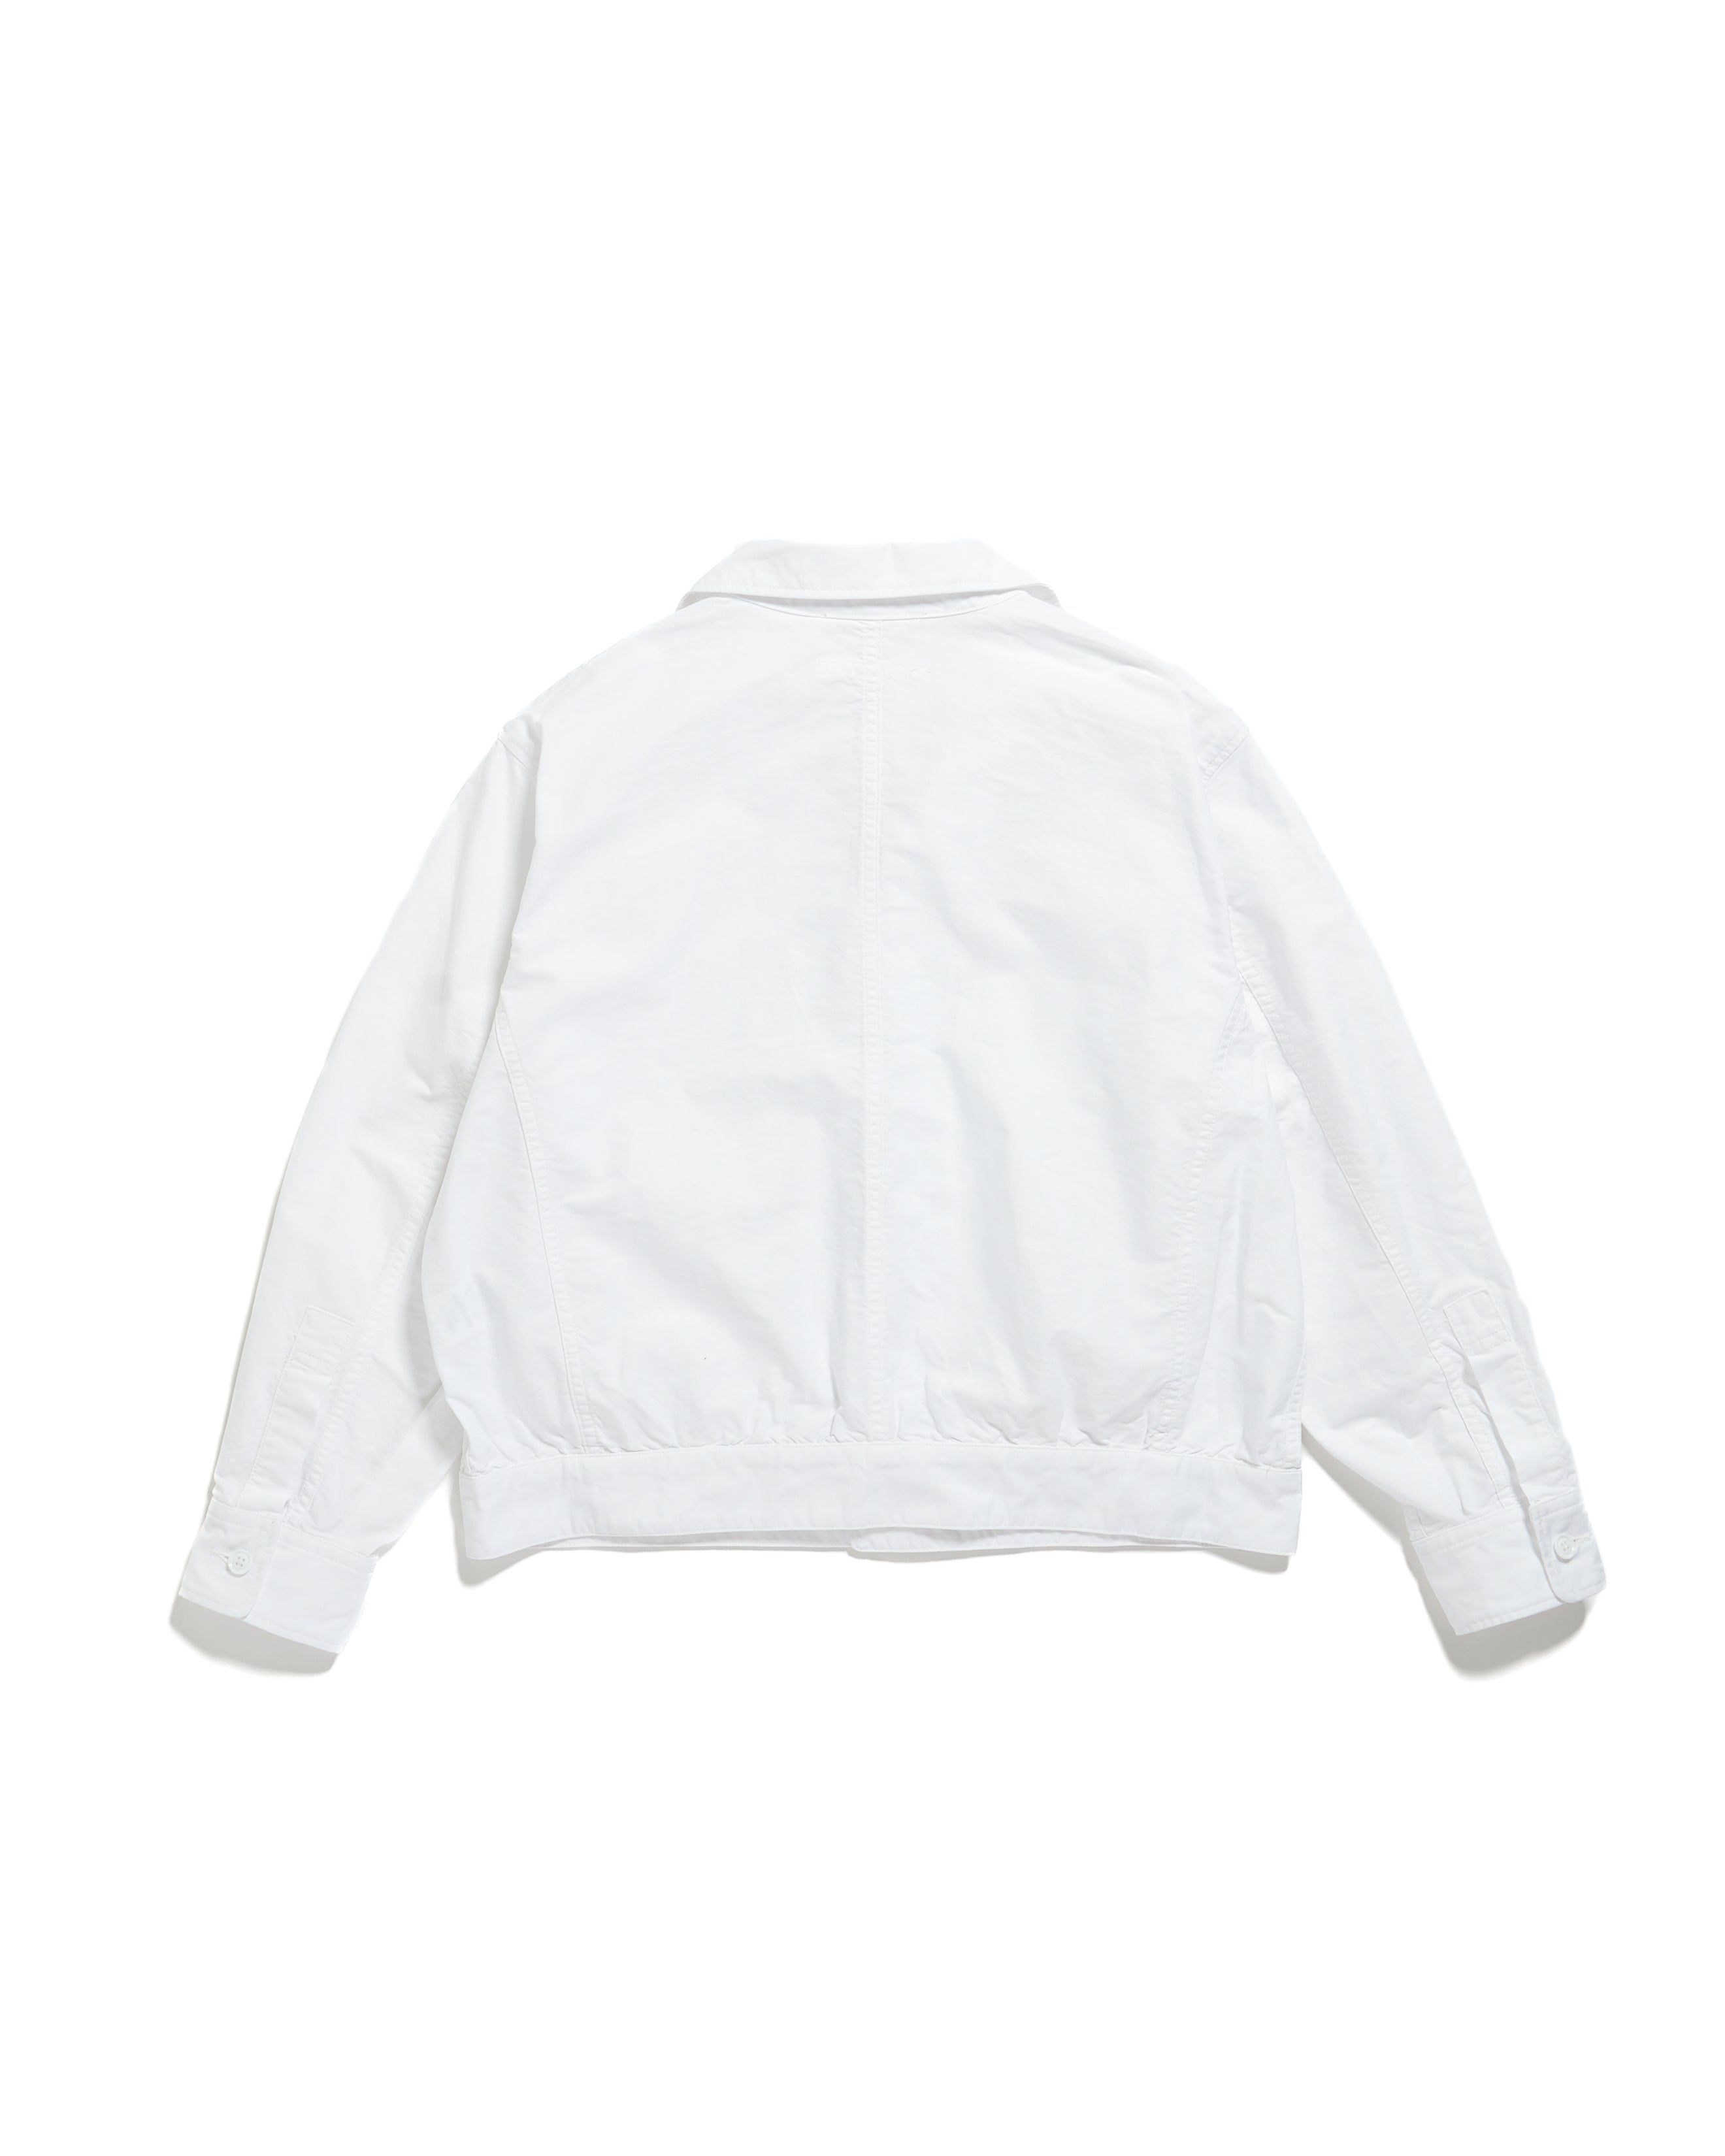 Ike Shirt - White Cotton Oxford